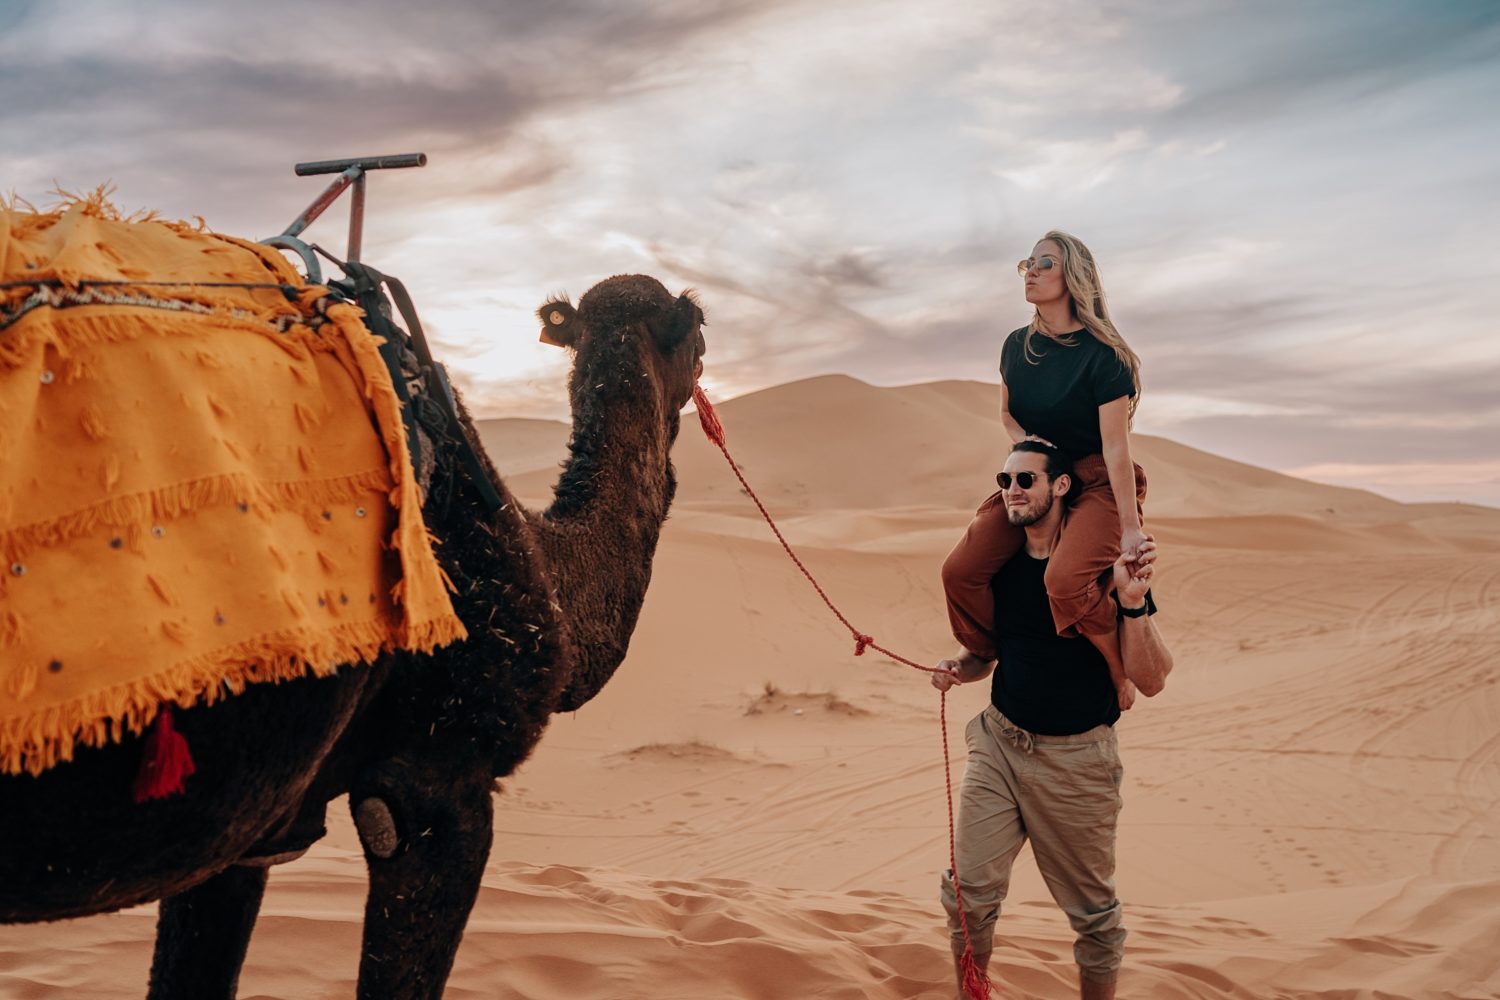 Morocco sahara desert engagement photographer couple photos